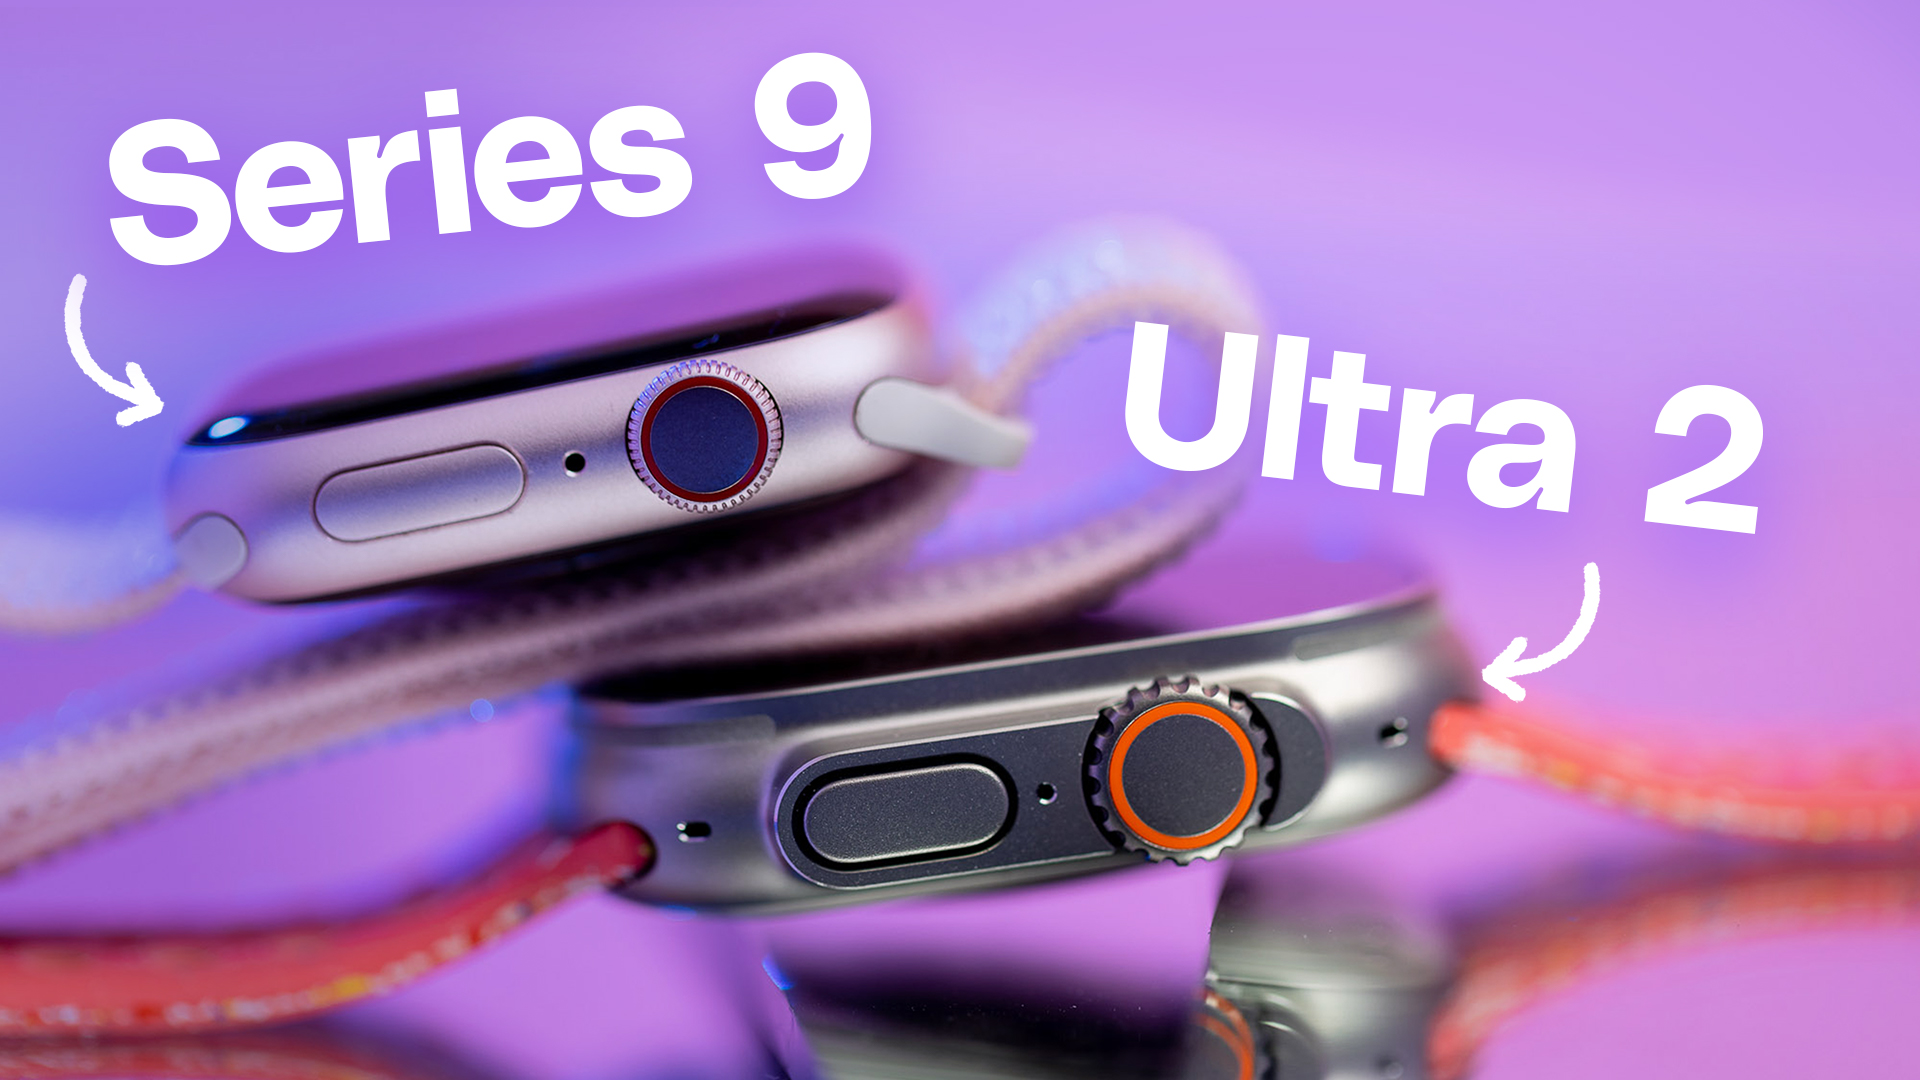 Review: Apple Watch Ultra – 2:48AM